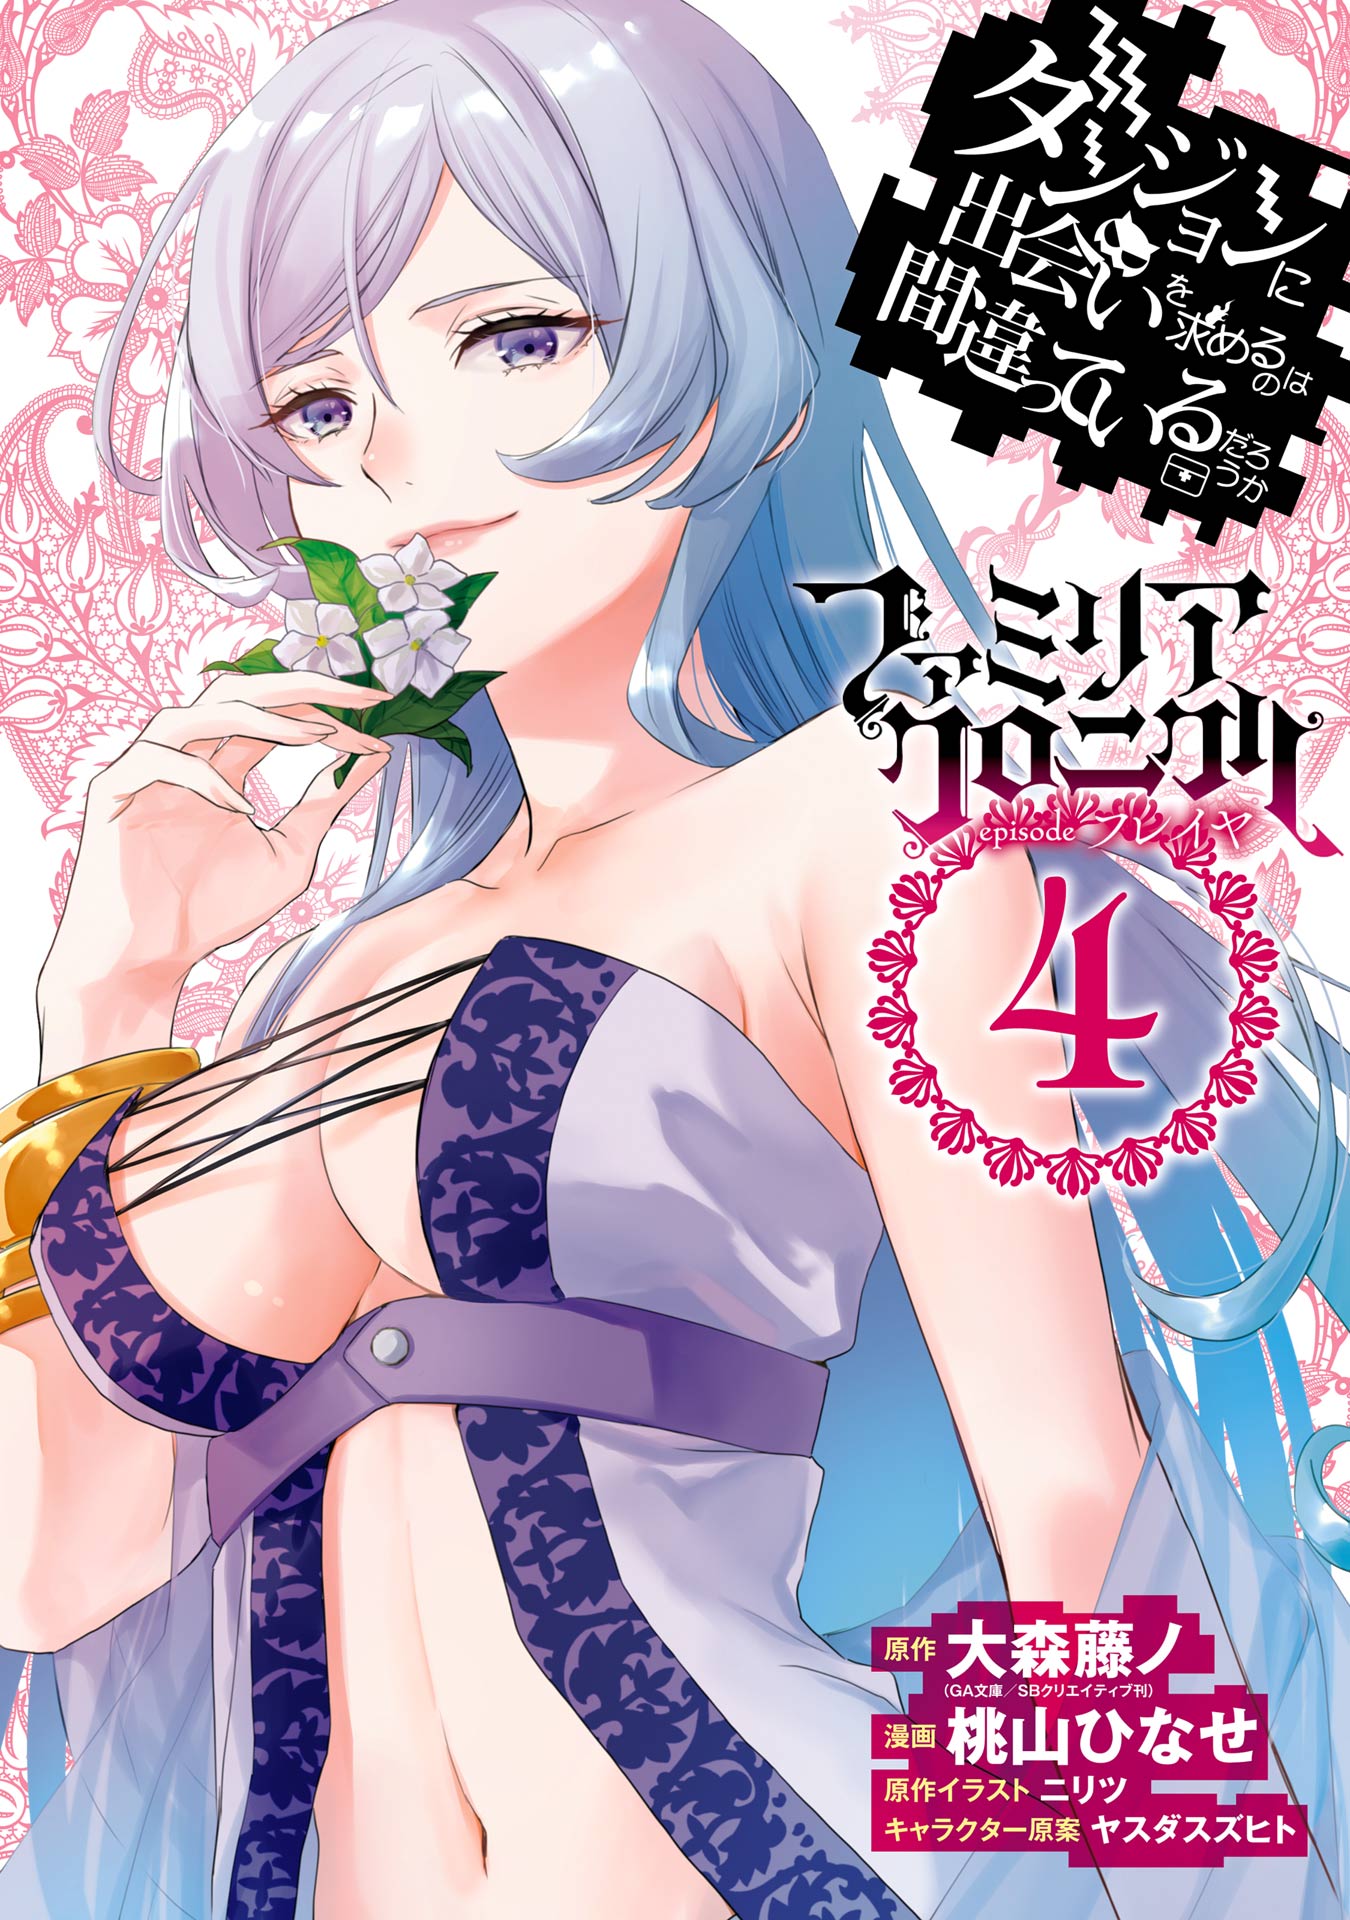 DanMachi Manga Volume 4, DanMachi Wiki